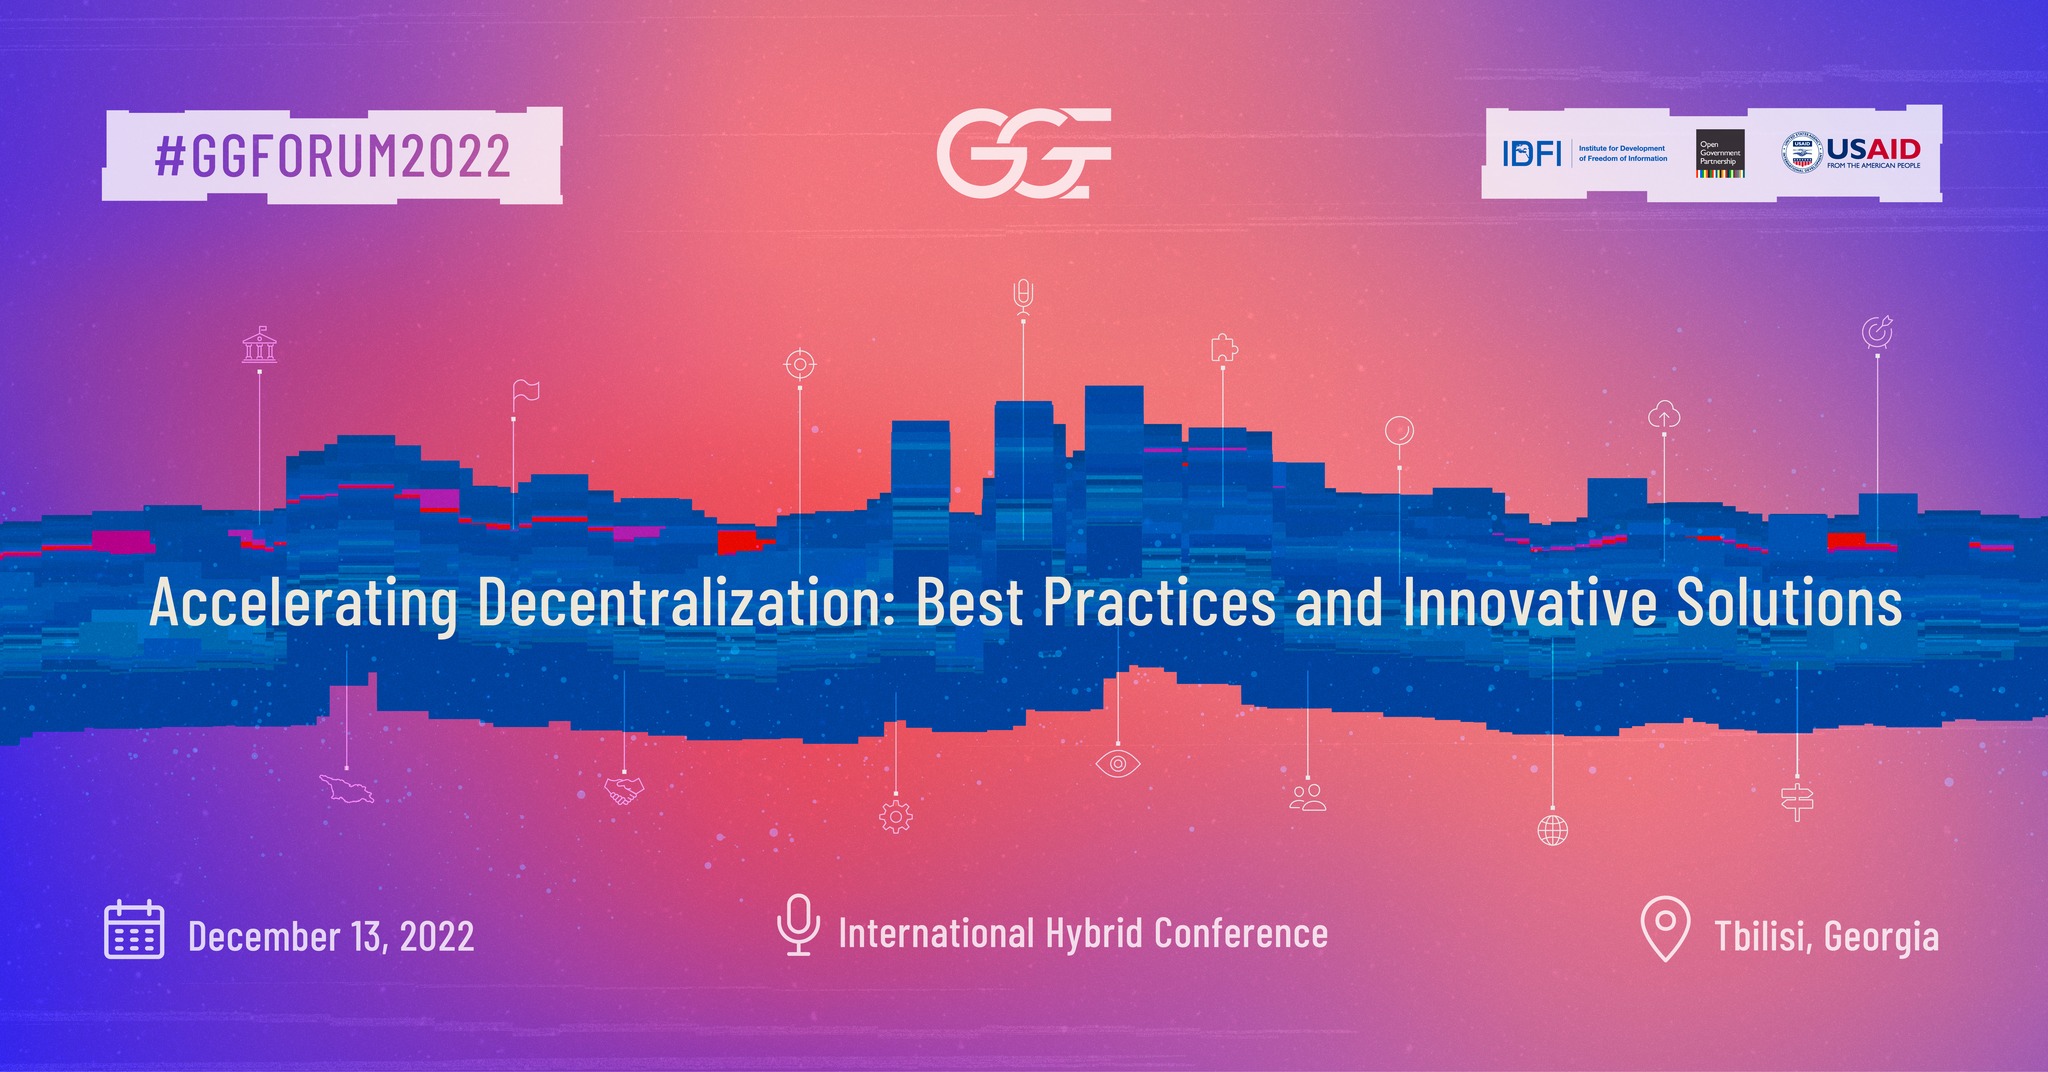 Hybrid conference “Good Governance Forum 2022” GGForum2022